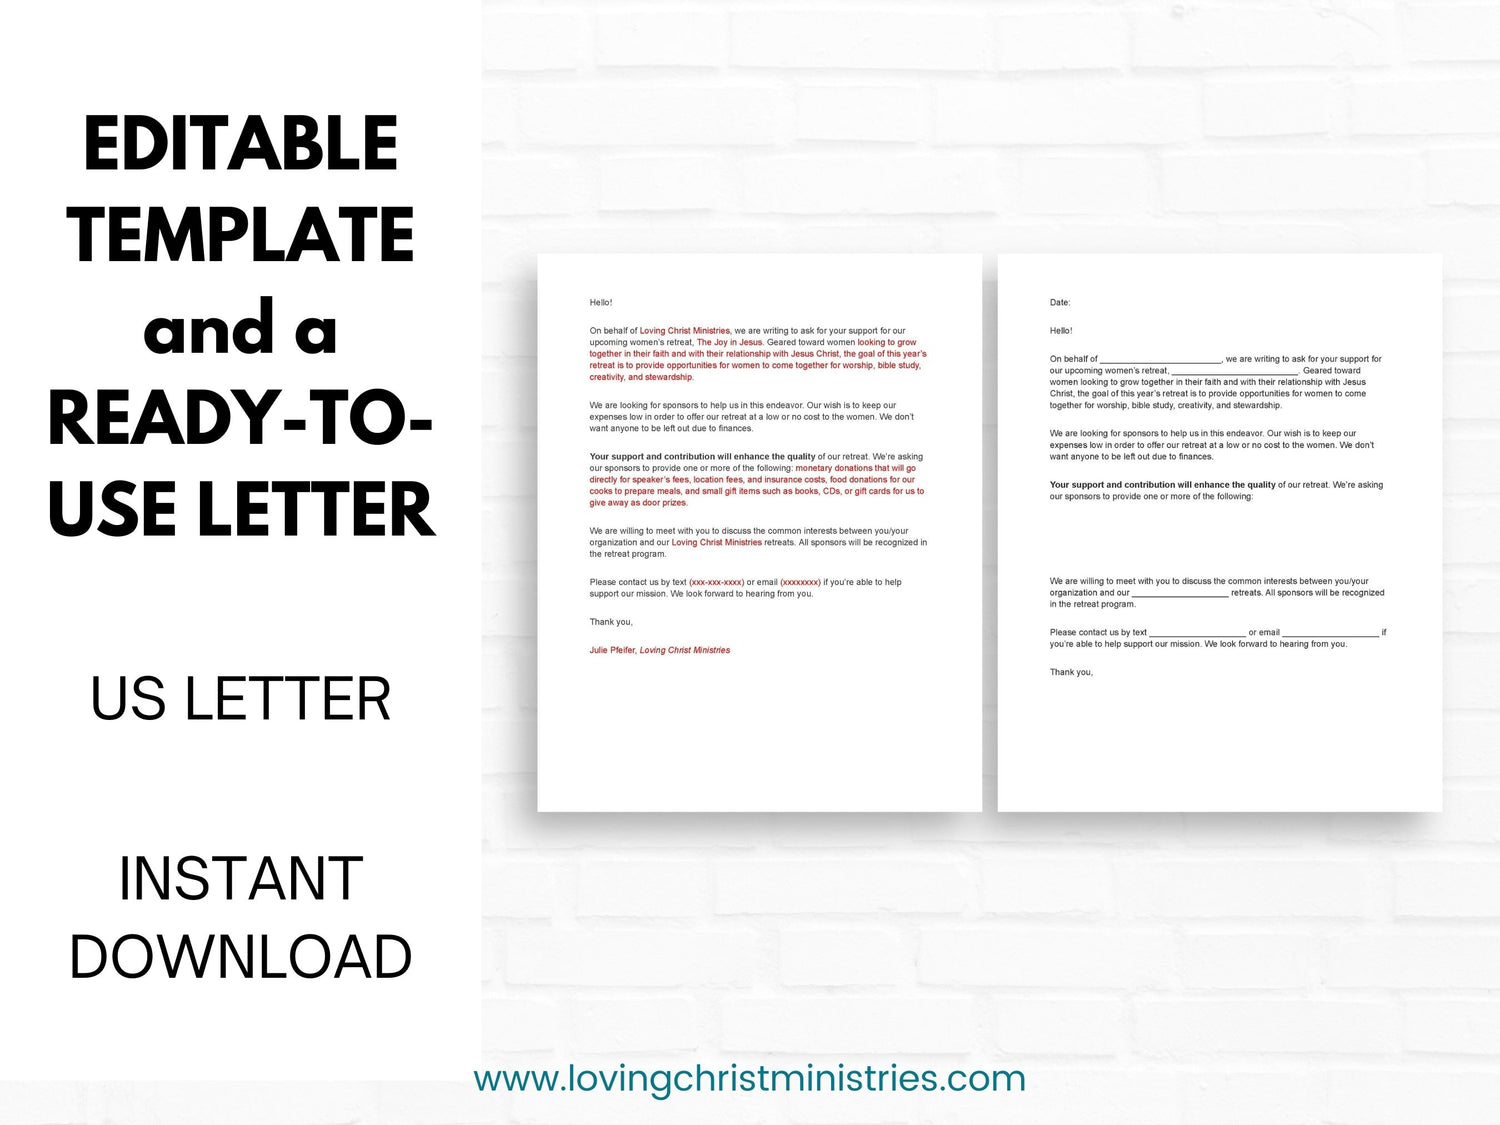 Editable Request a Sponsor Letter, Printable, Women&